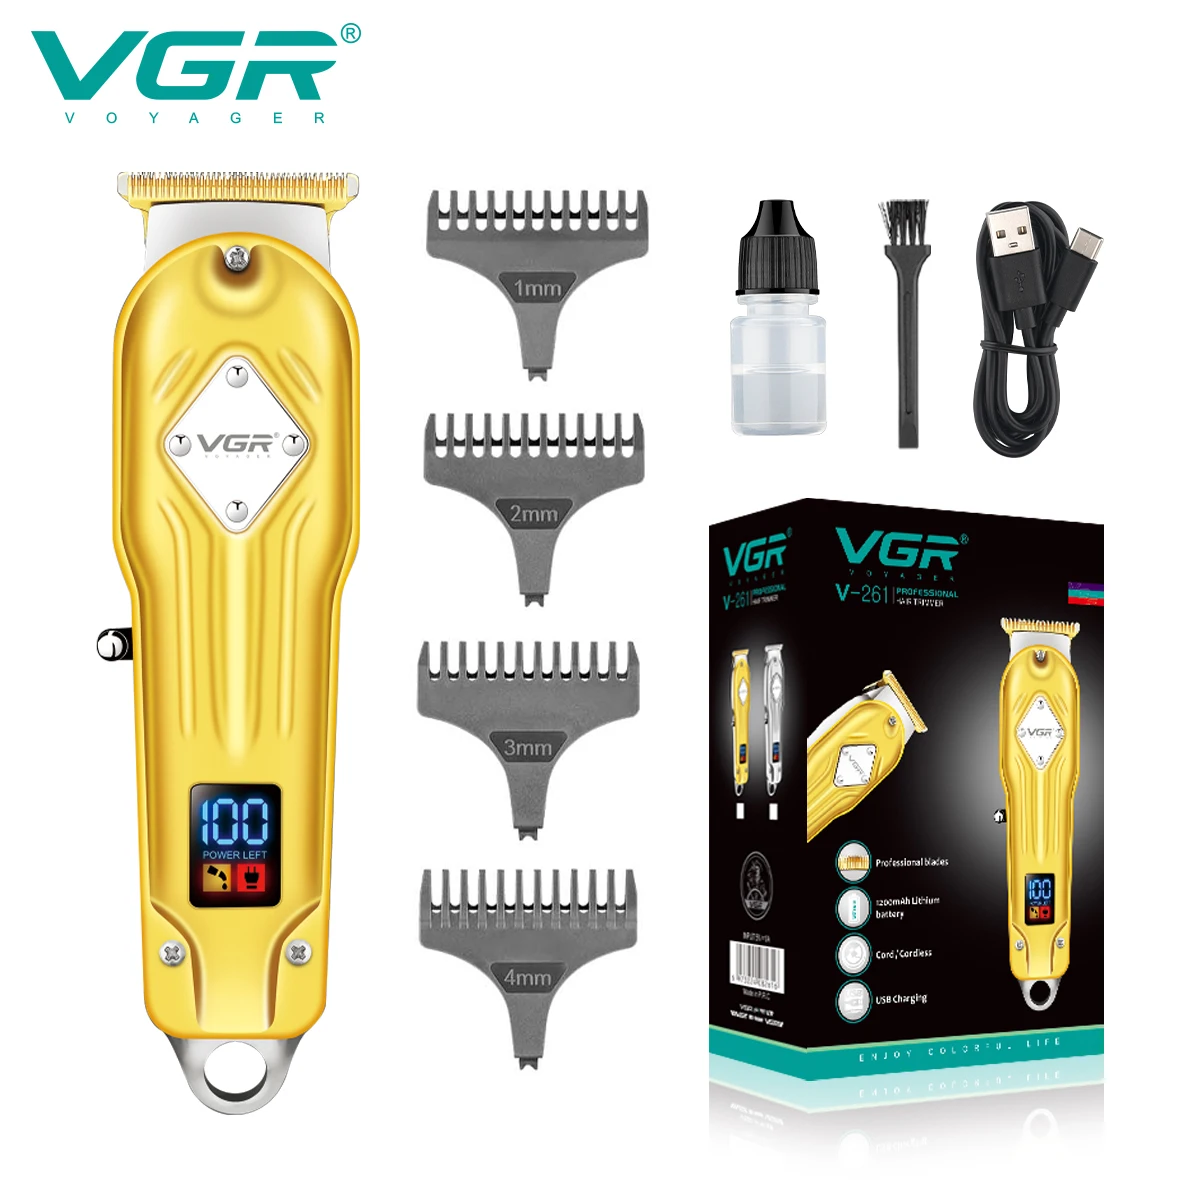 

VGR Hair Trimmer Professional Hair Clipper Metal Hair Cutting Machine Electric LED Display Zero Cutting Machine for Men V-261